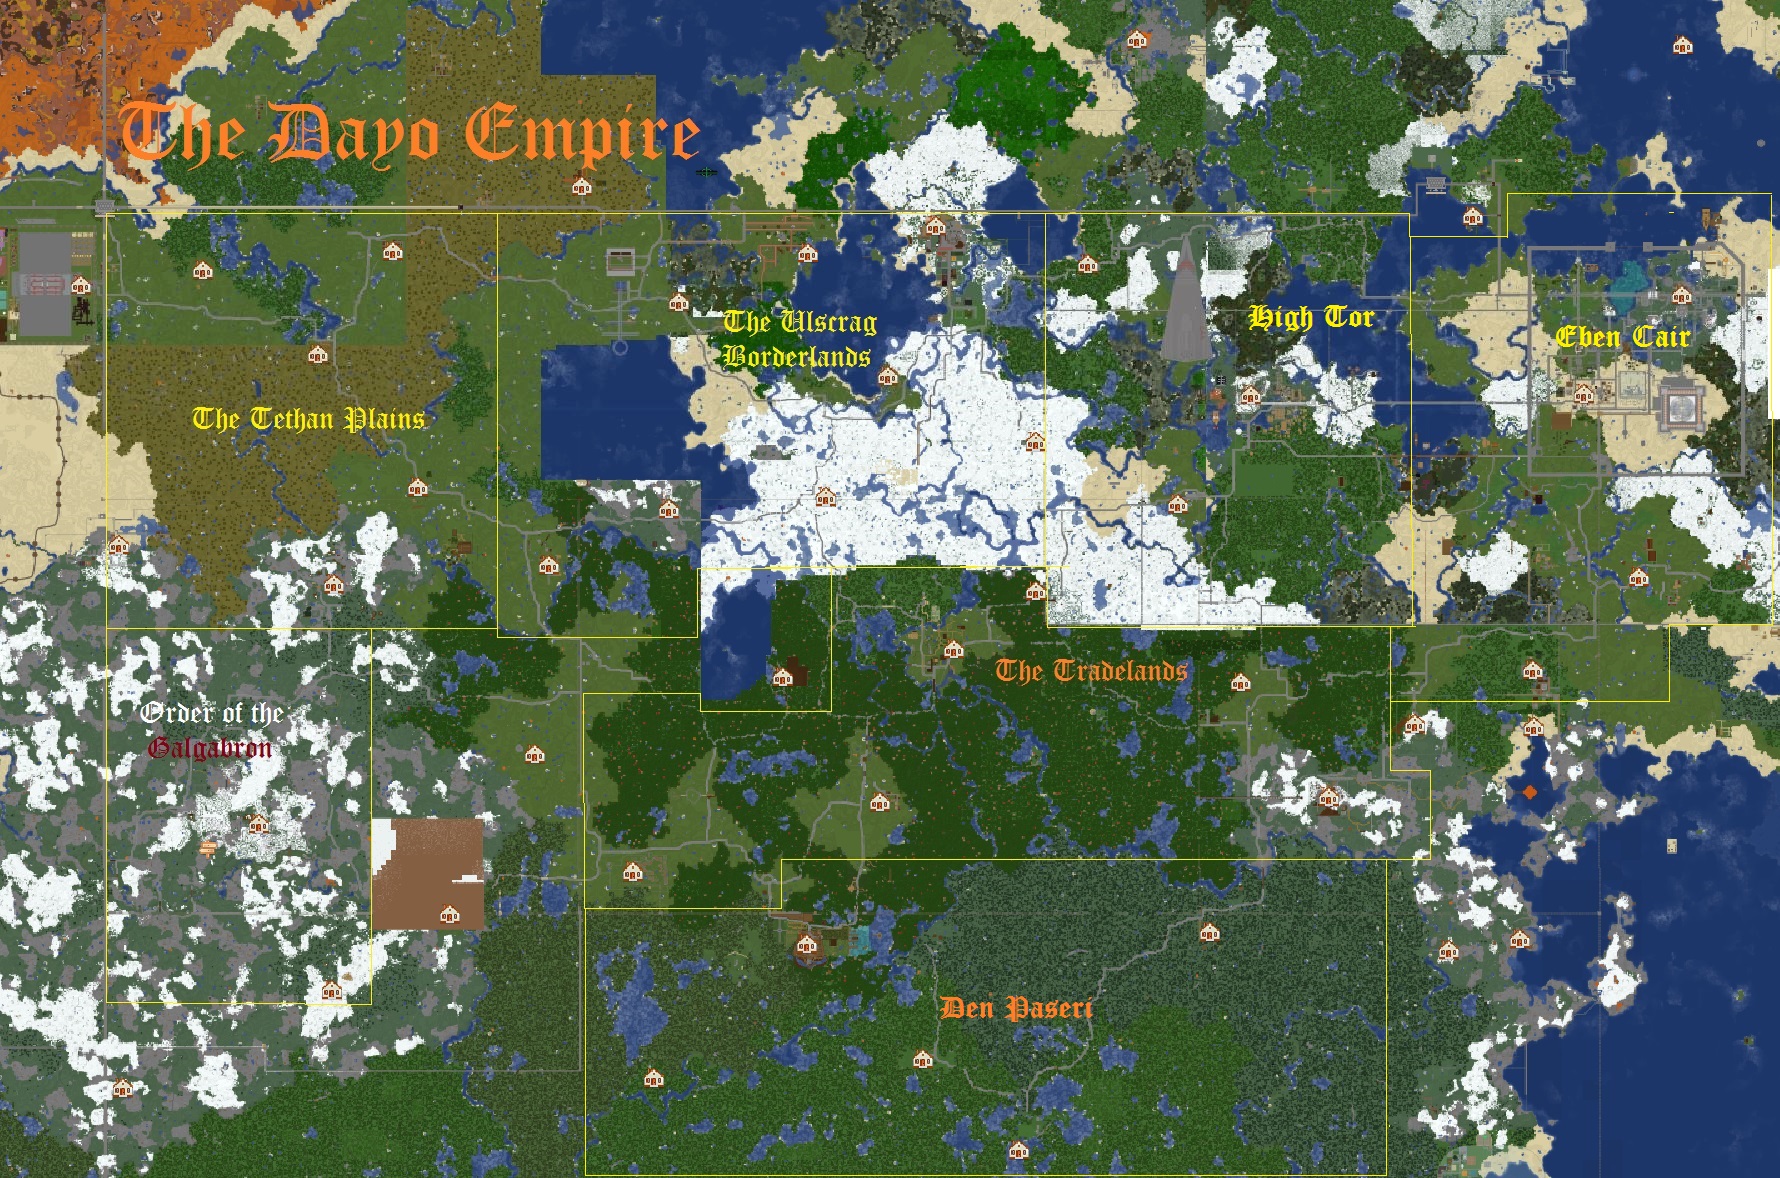 dayo_empire_areas.jpg